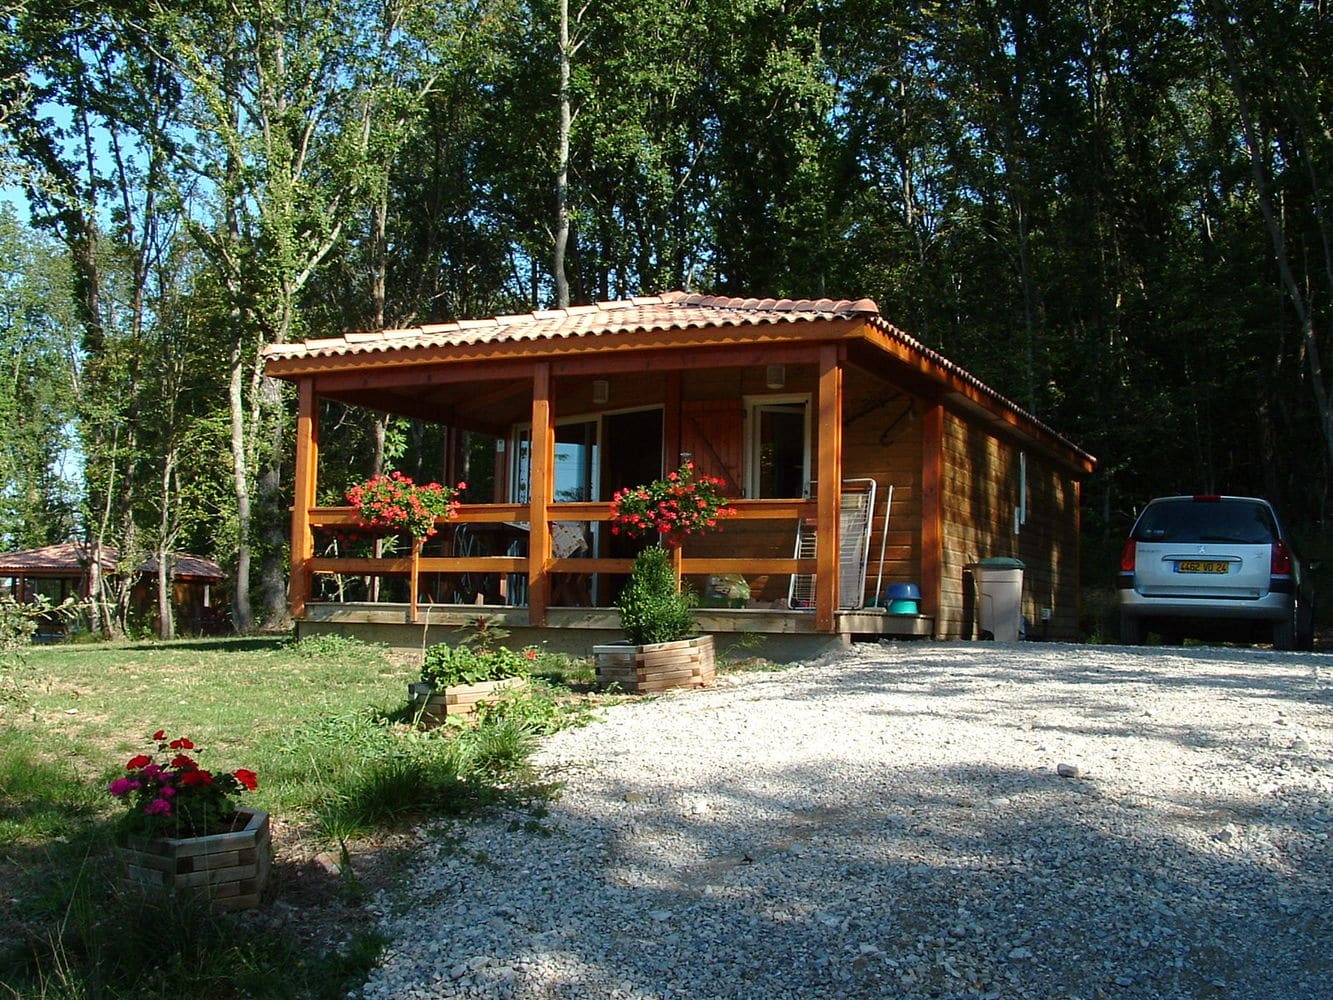 Location de chalet en Ariège (Camping de La Besse)